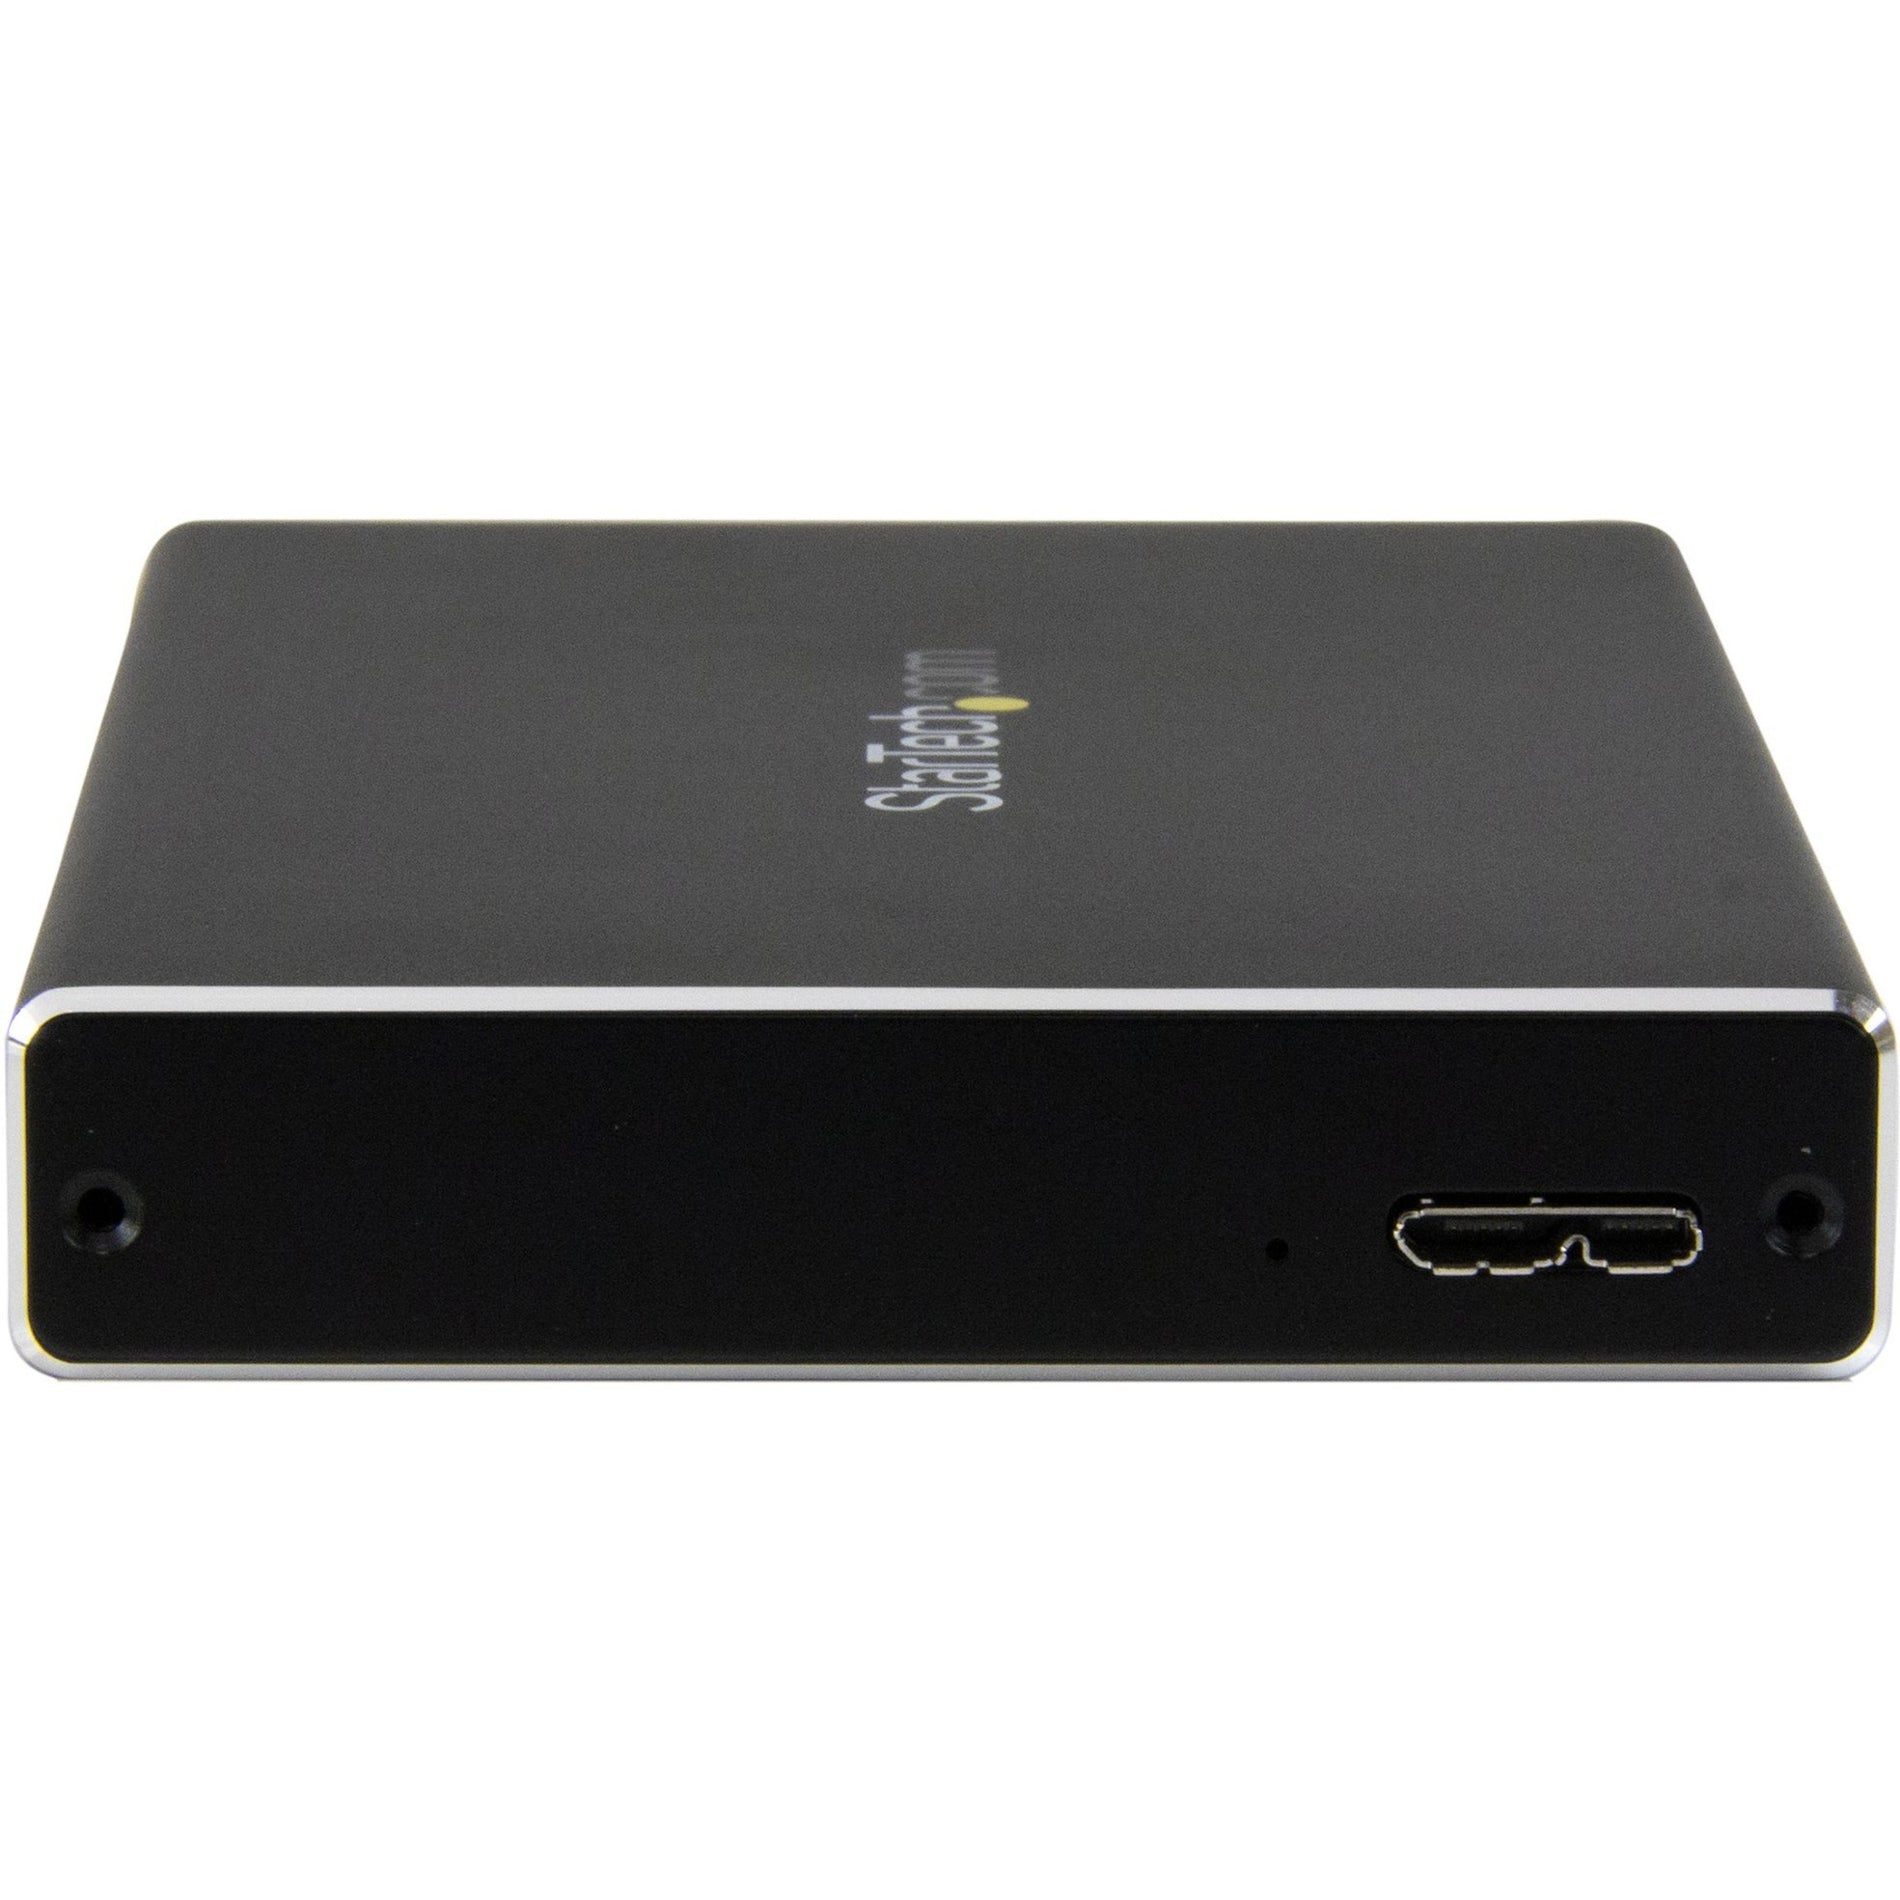 StarTech.com UNI251BMU33 USB 3.0 Universal 2.5in SATA III or IDE Hard Drive Enclosure - Portable External SSD / HDD, UASP Support